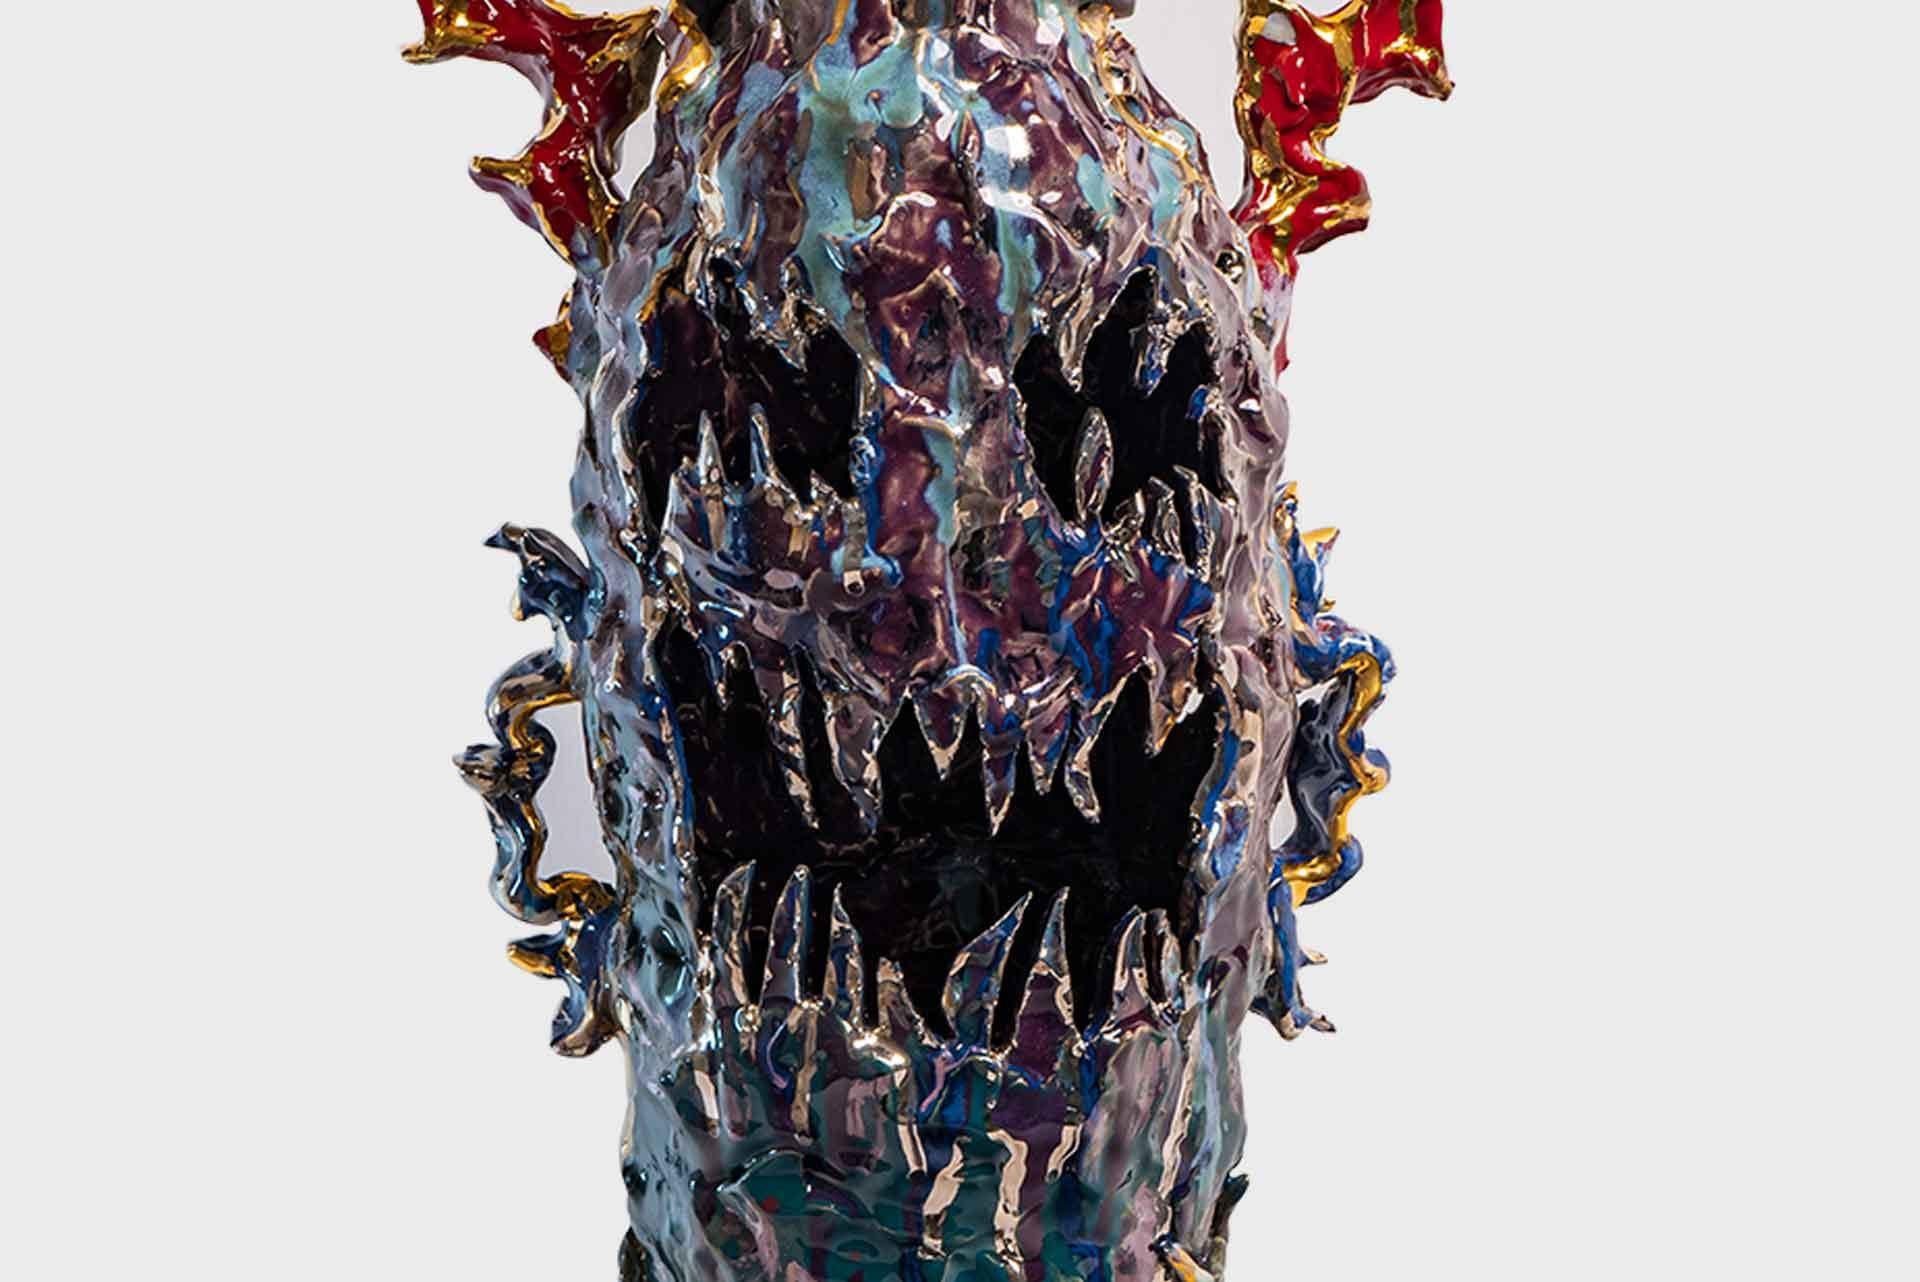 English Contemporary Ceramic Vase “Purple Serenade” by Faye Hadfield, Stoneware Ceramic